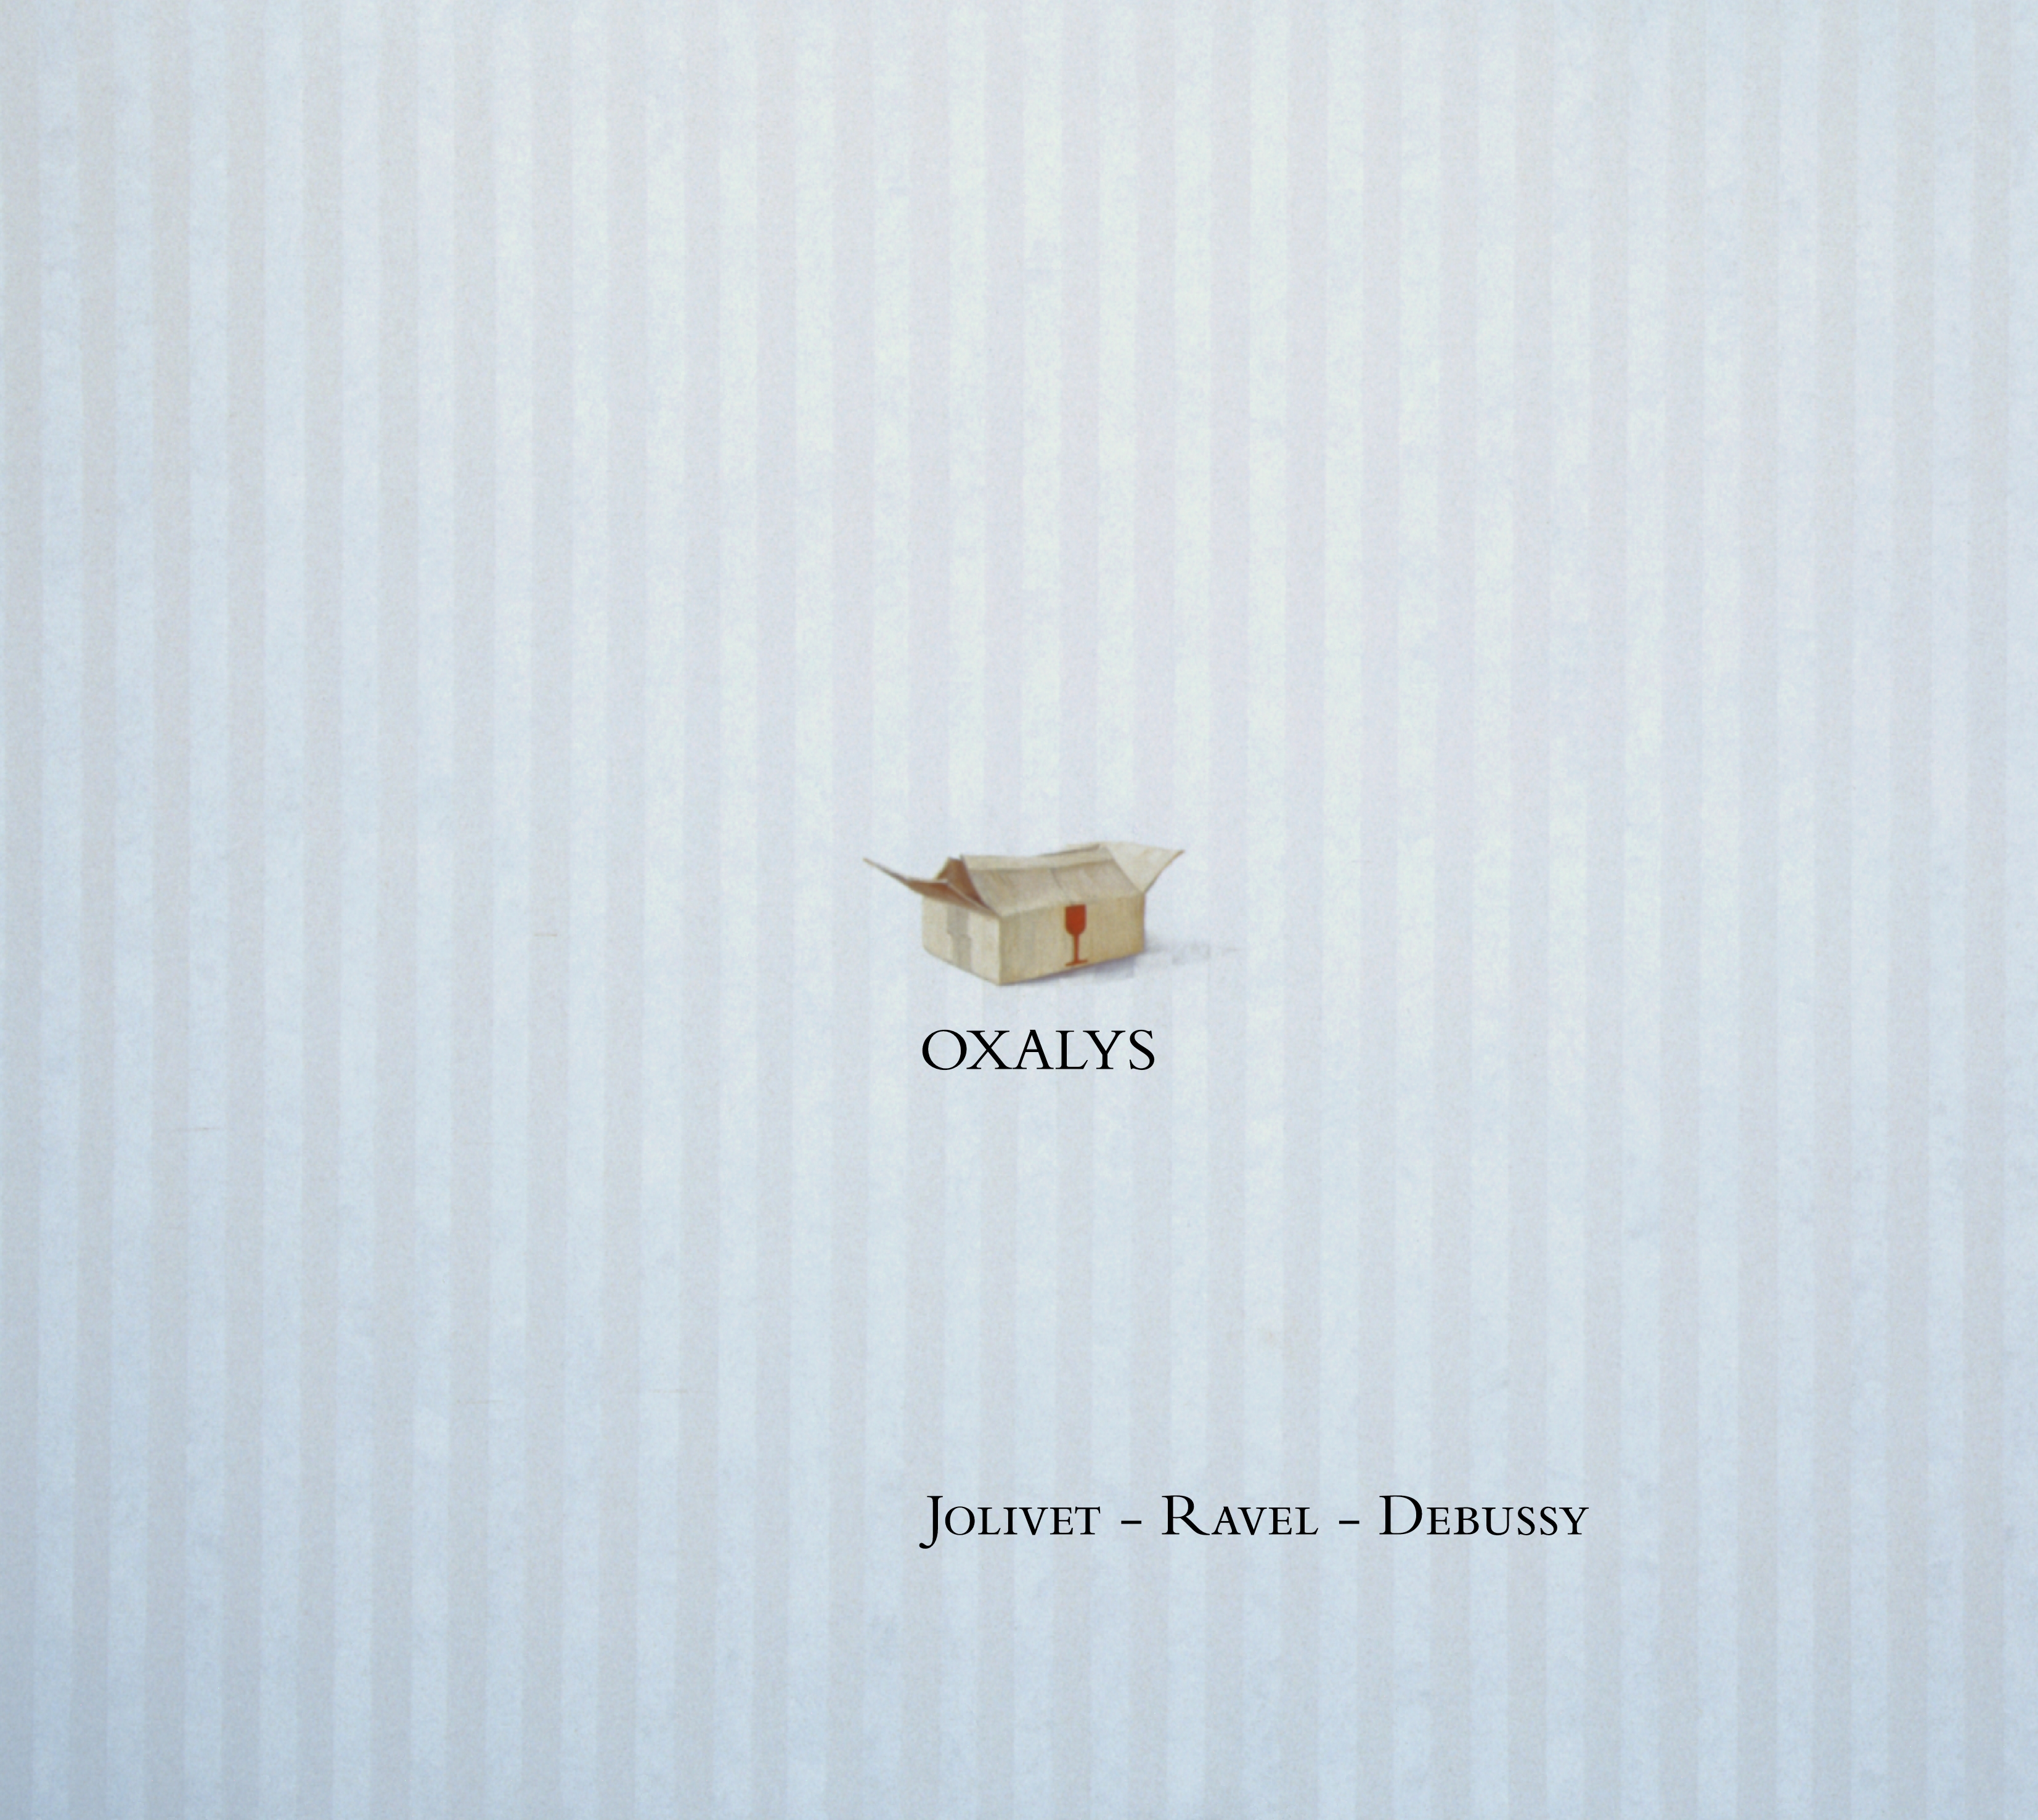 André Jolivet - Maurice Ravel - Claude Debussy - Oxalys